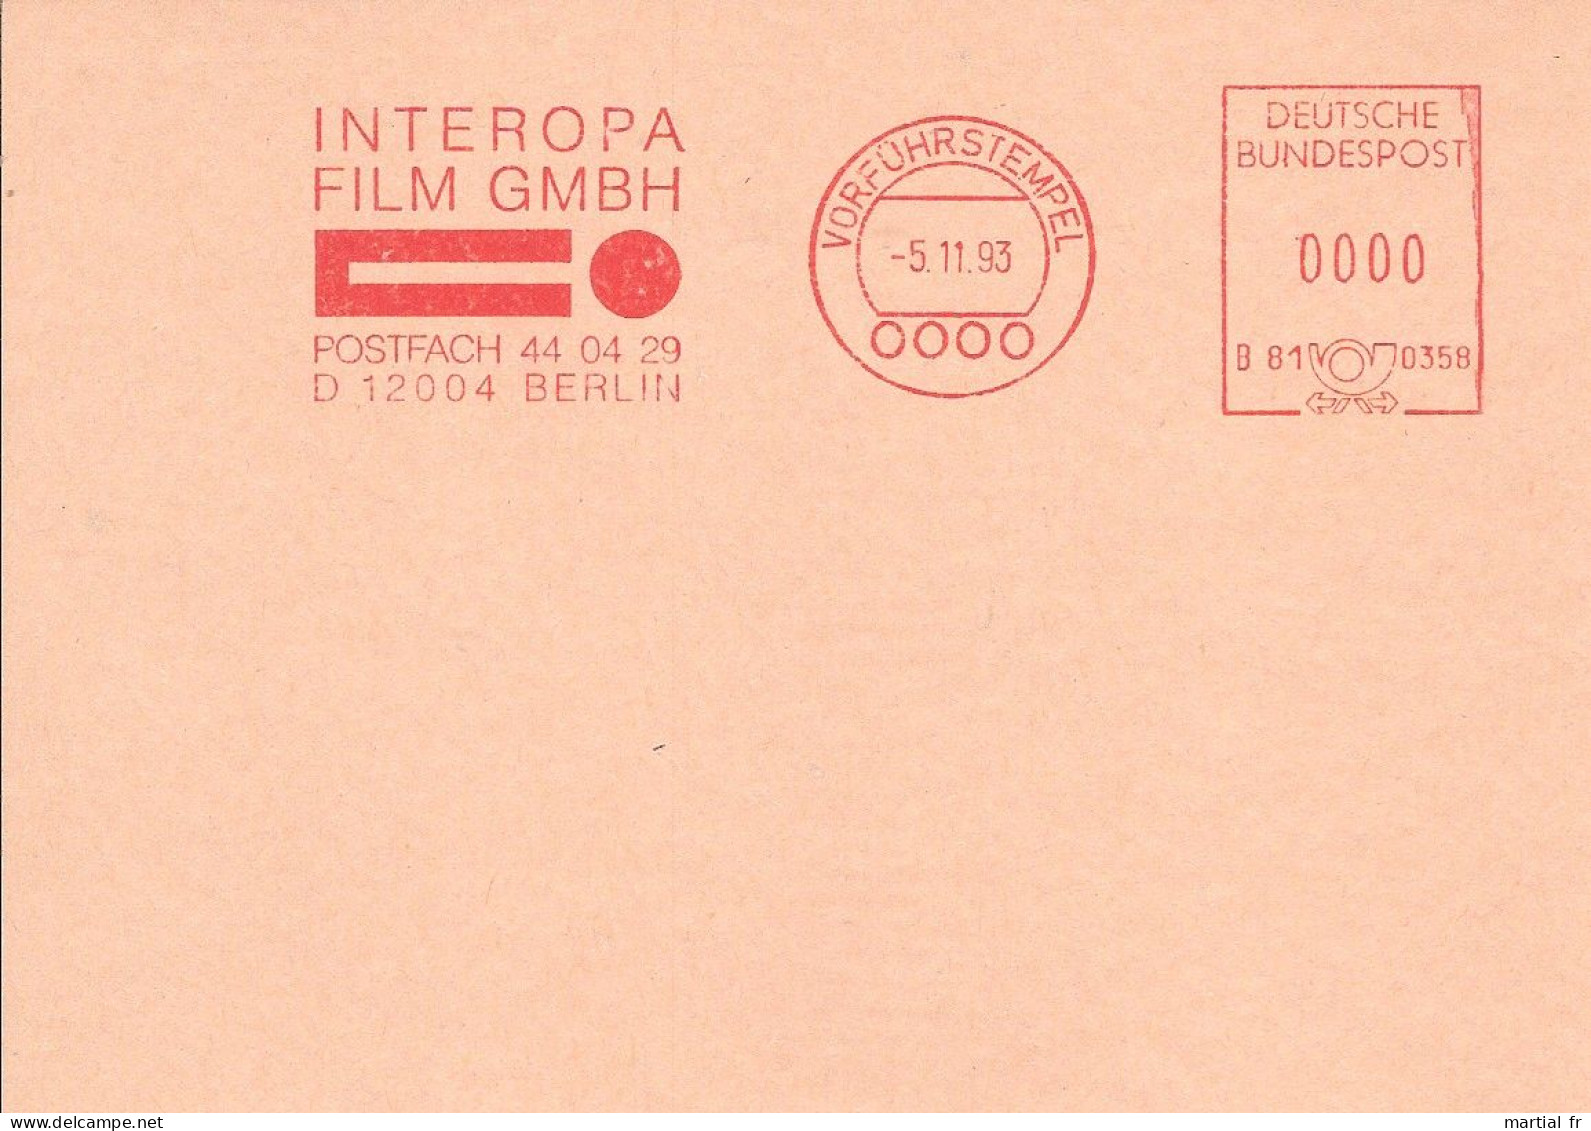 EMA ALLEMAGNE SPECIMEN GERMANY PHOTOGRAPHIE PHOTO FOTO FOTOGRAFIE FILM CINEMA KINO INTEROPA BERLIN - Cinéma